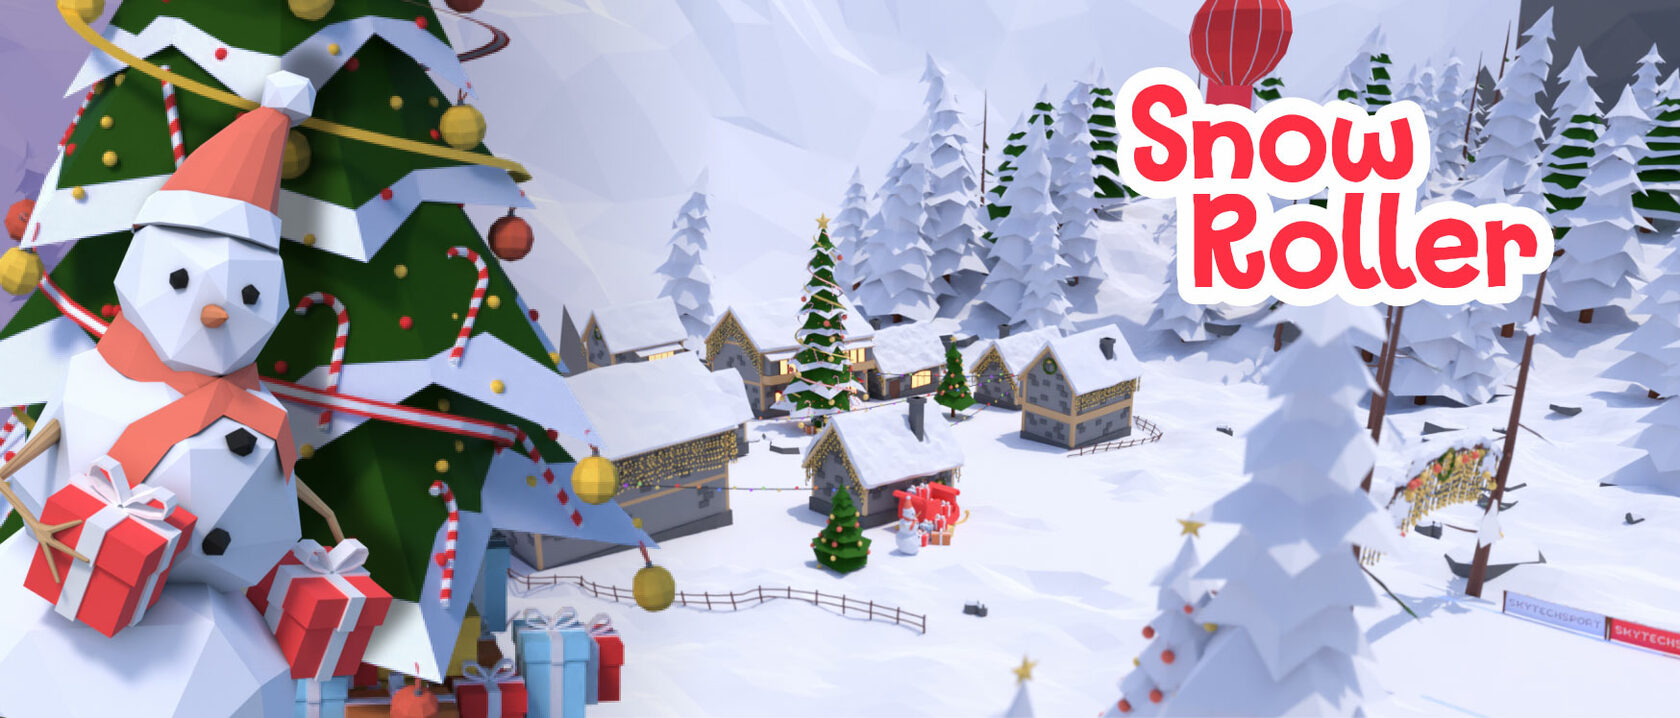 New Christmas video game with virtual snow racetracks